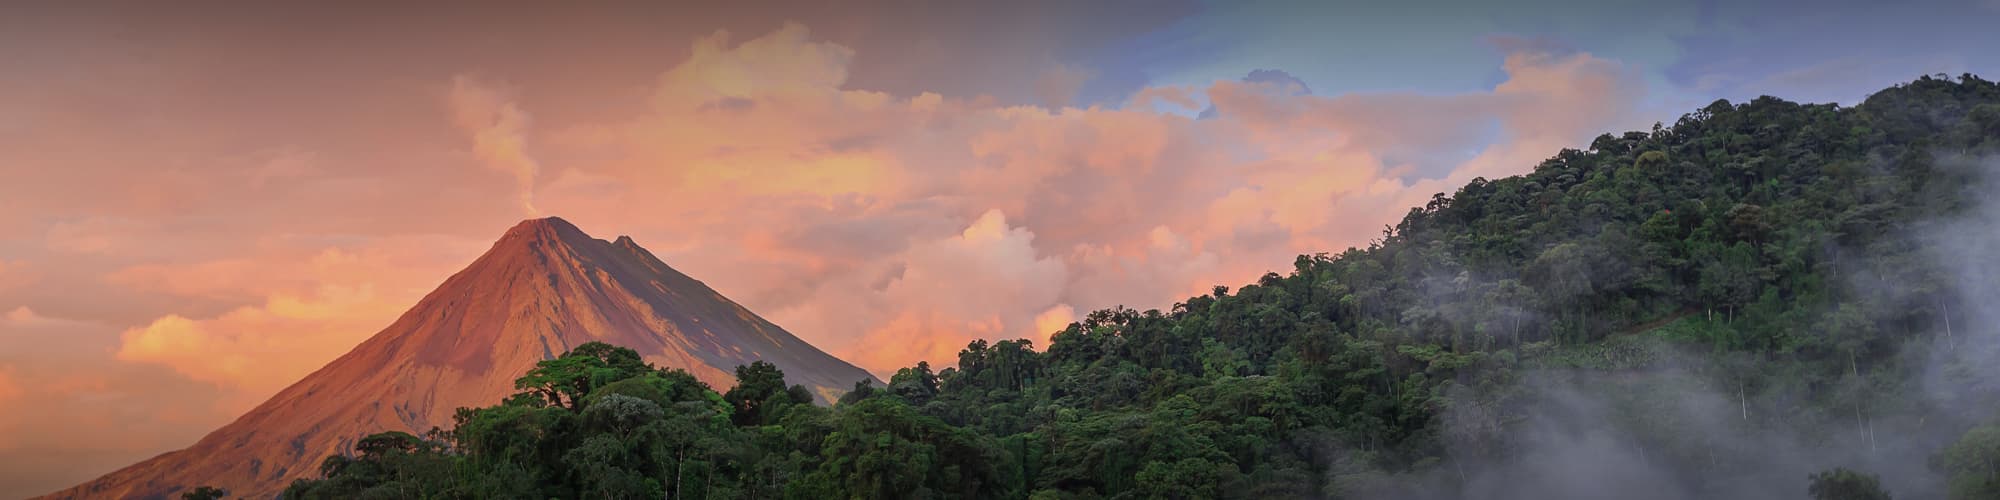 Trek au Costa Rica : randonnée, circuit et voyage © photodiscoveries / Adobe Stock